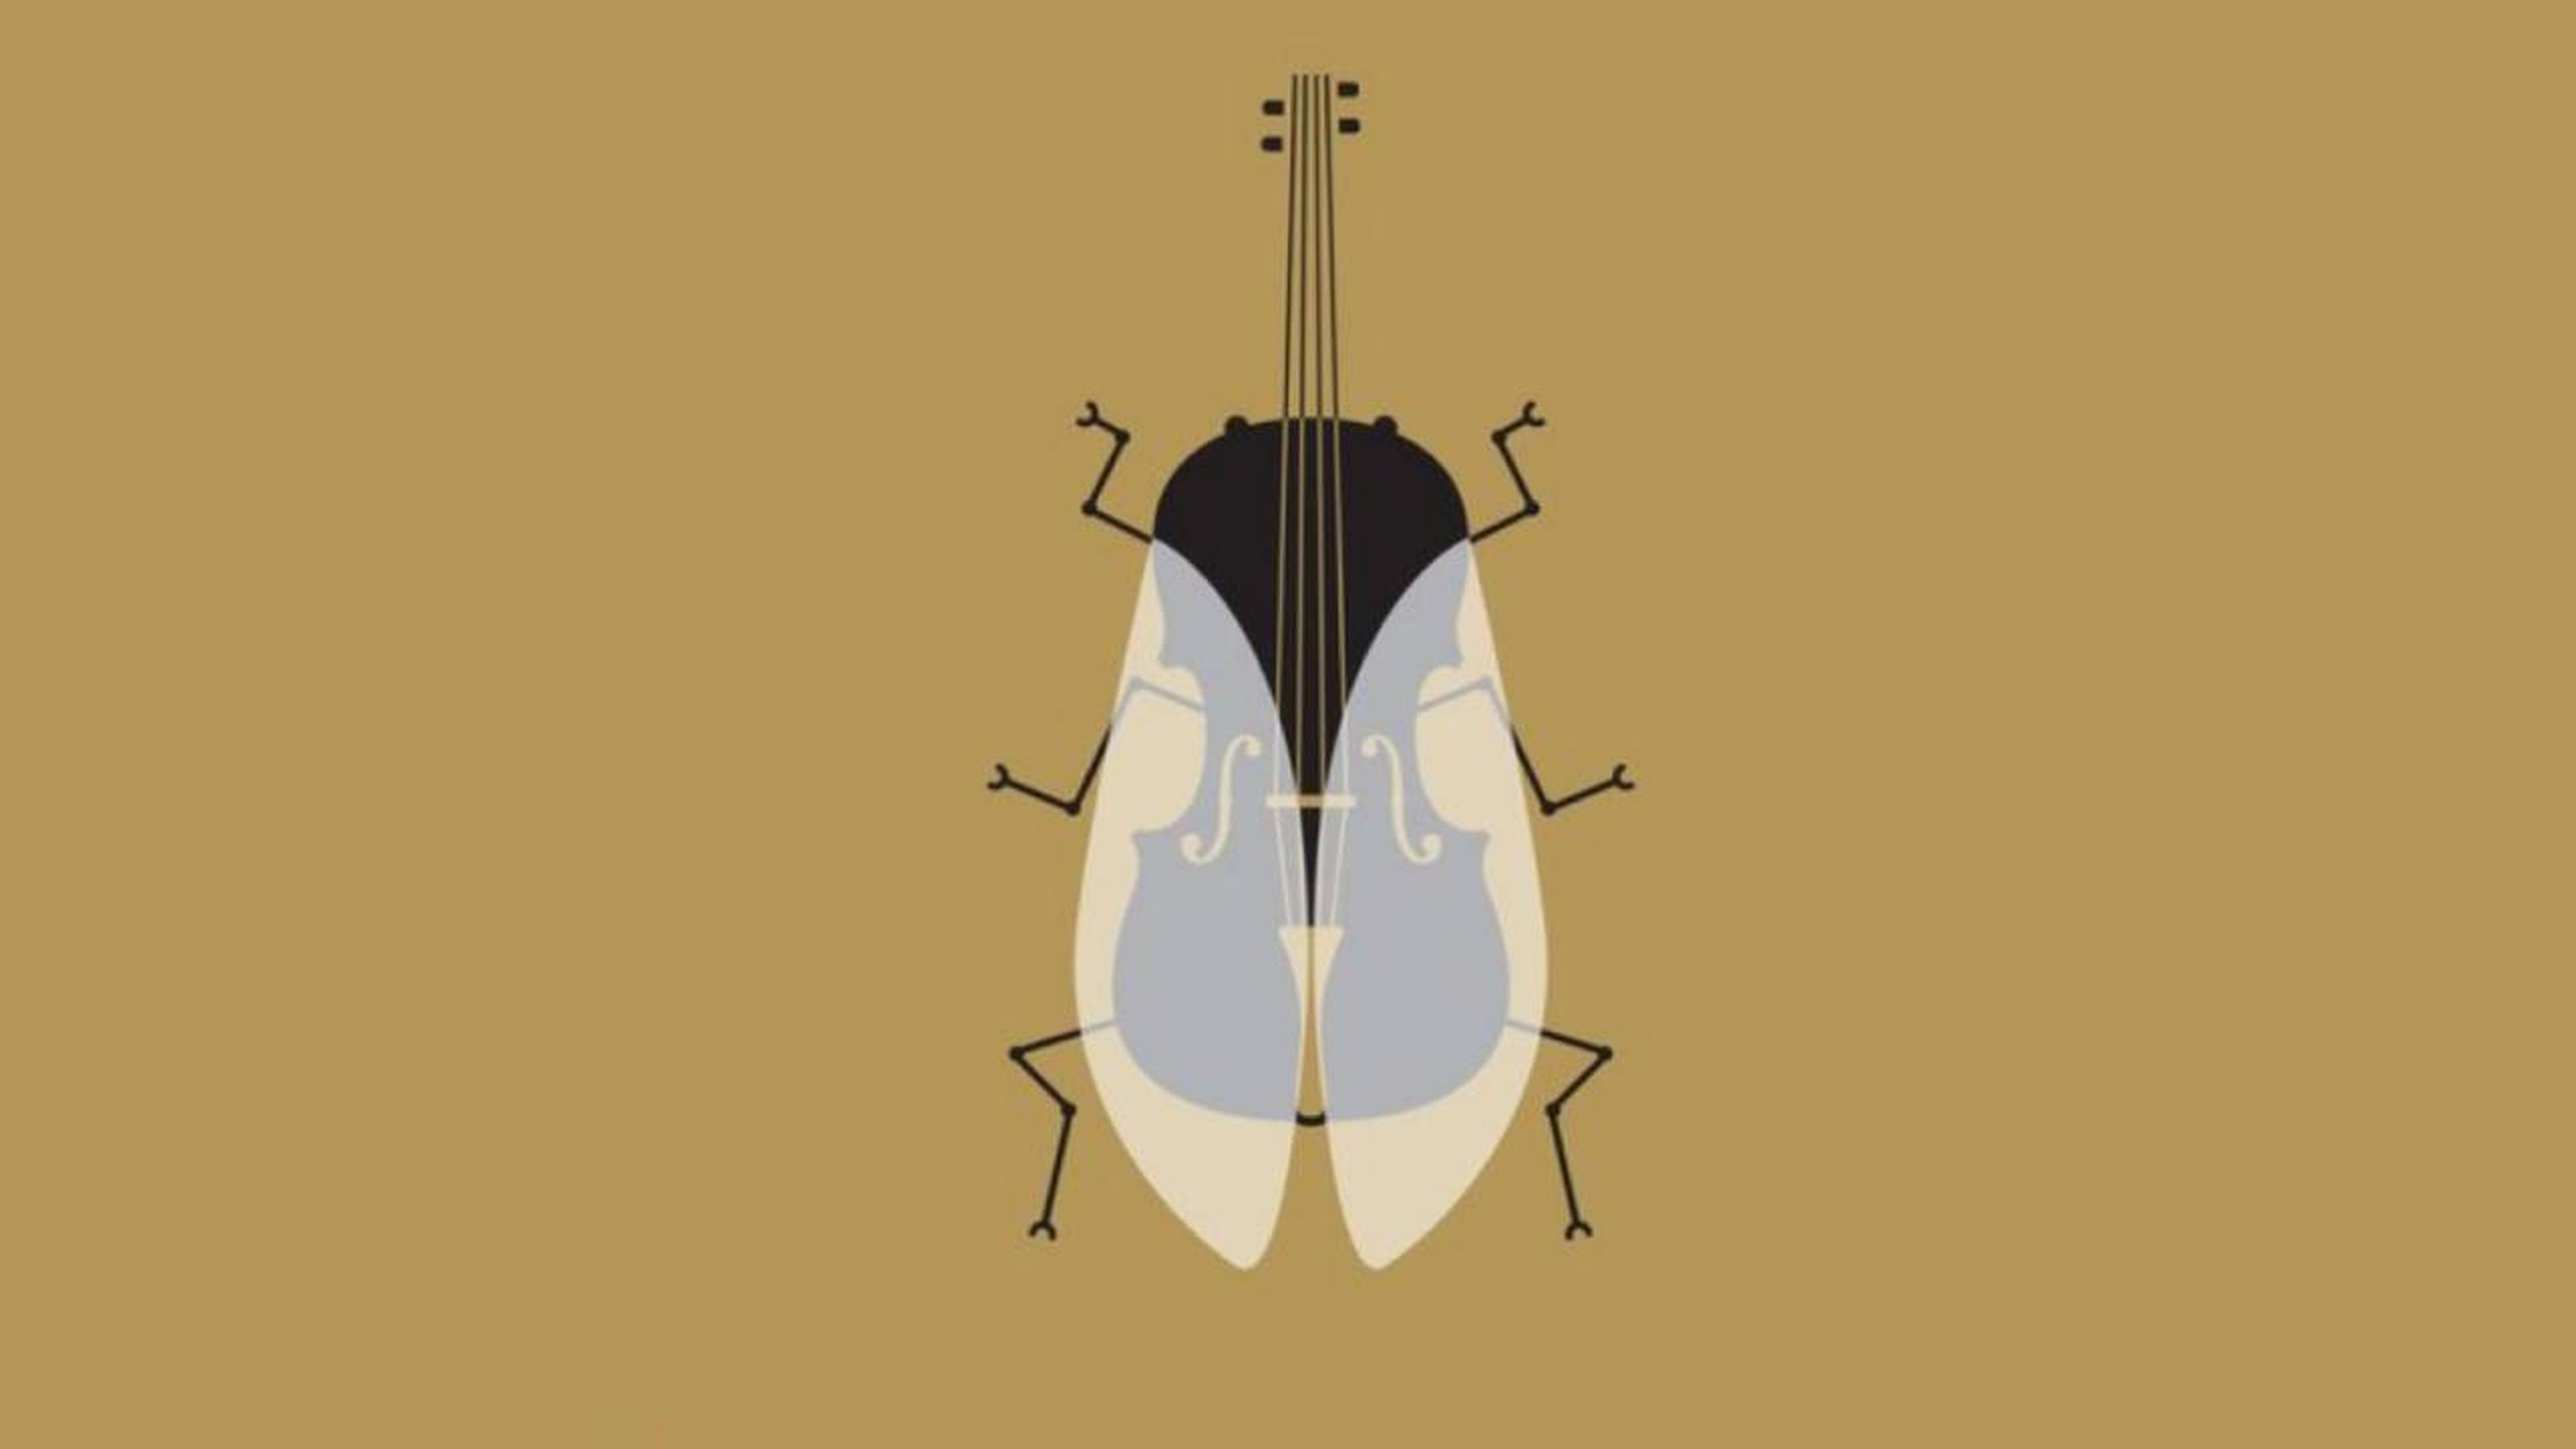 Test visual mosca violín